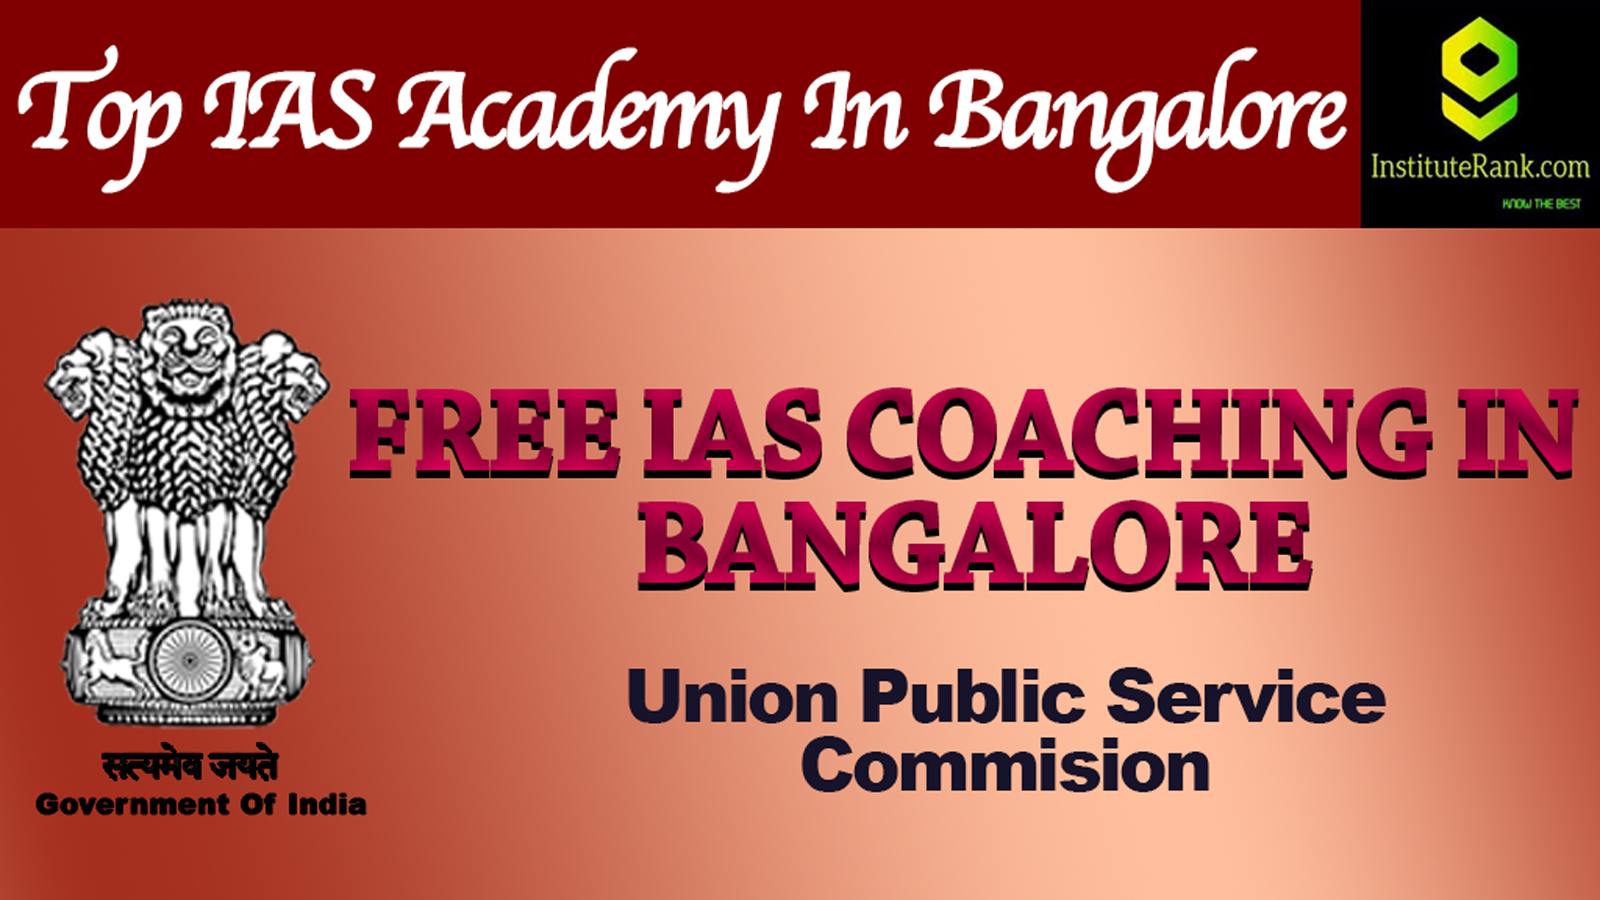 Free IAS Coaching in Bangalore